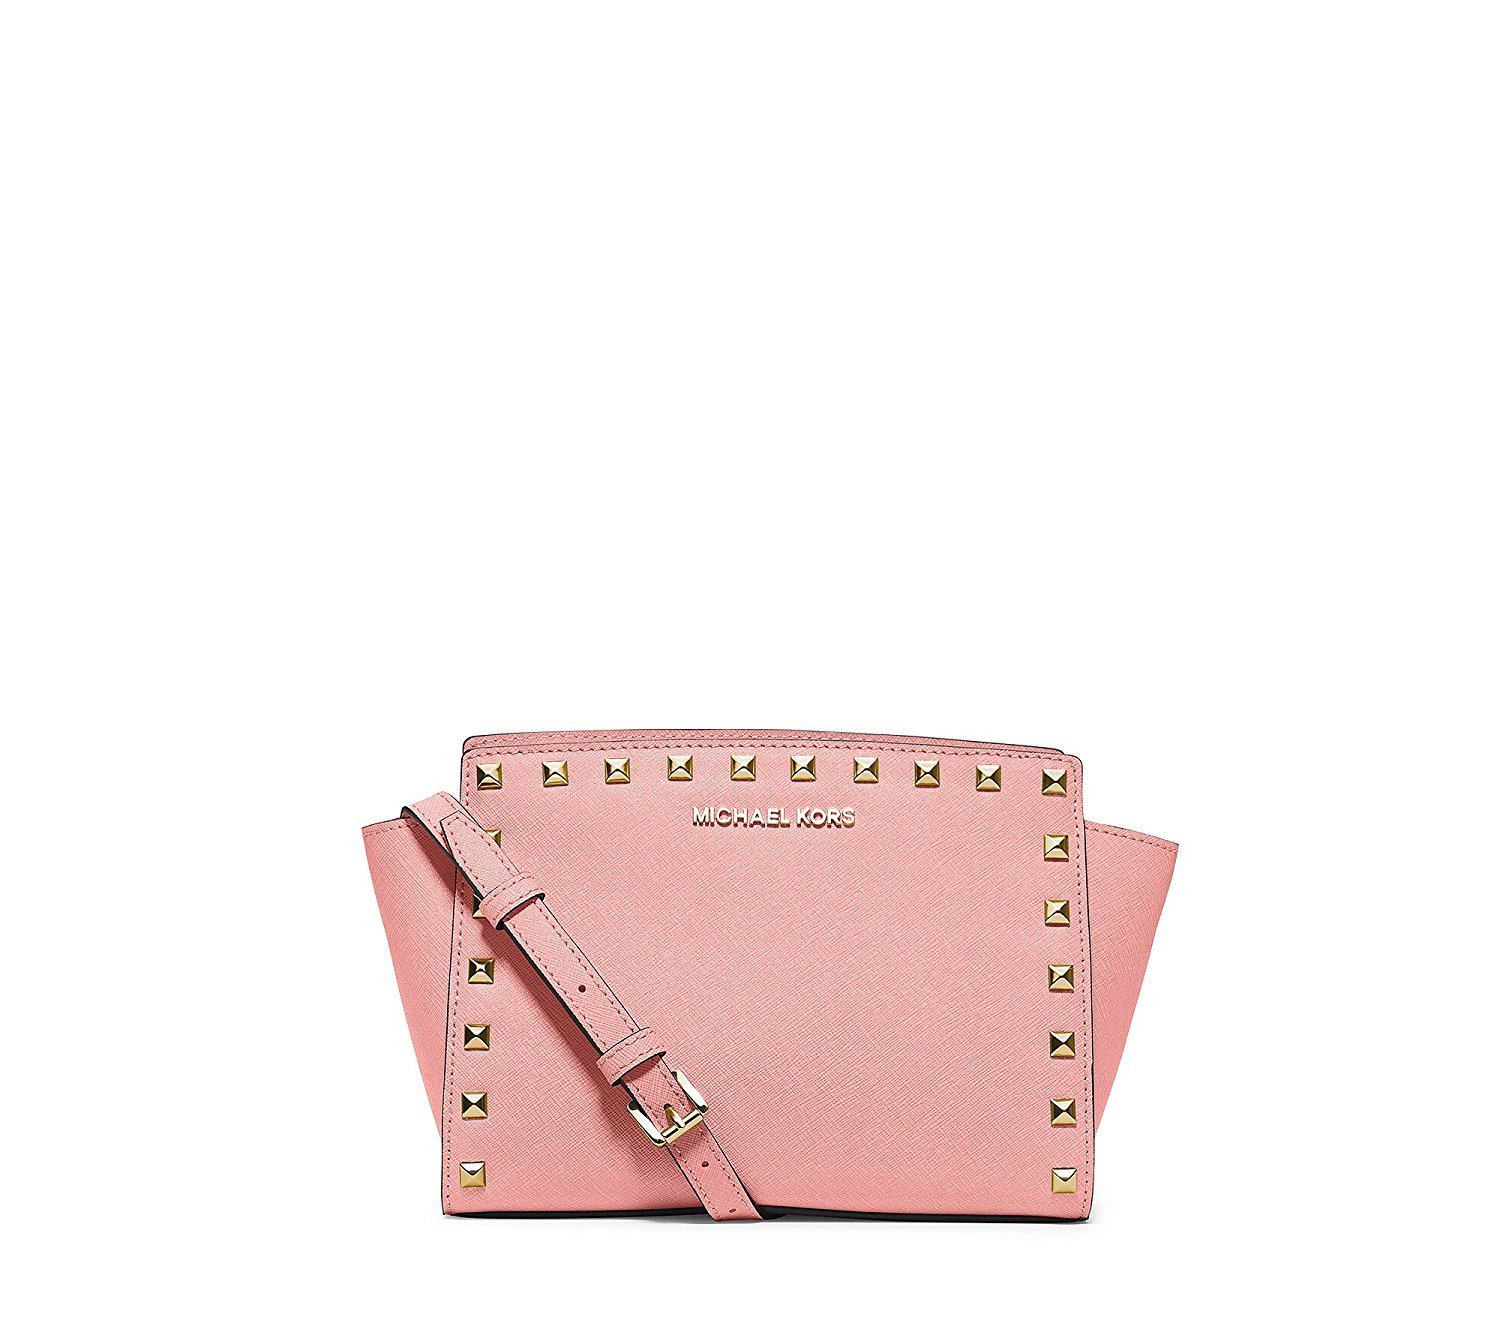 Michael Kors Women's Selma Leather Crossbody Bag Pink MK30268